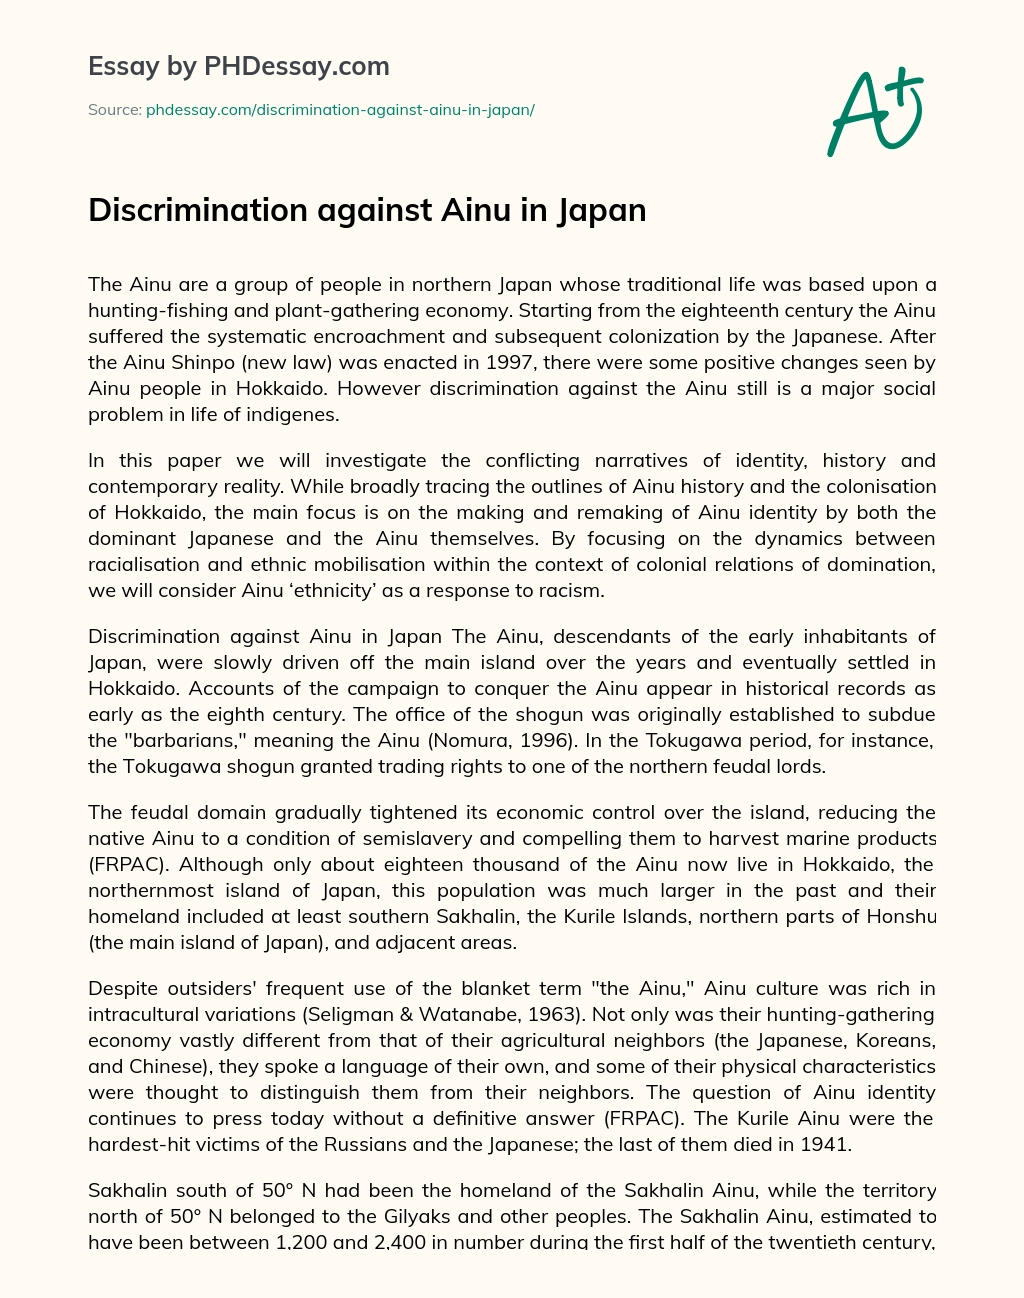 Discrimination against Ainu in Japan essay